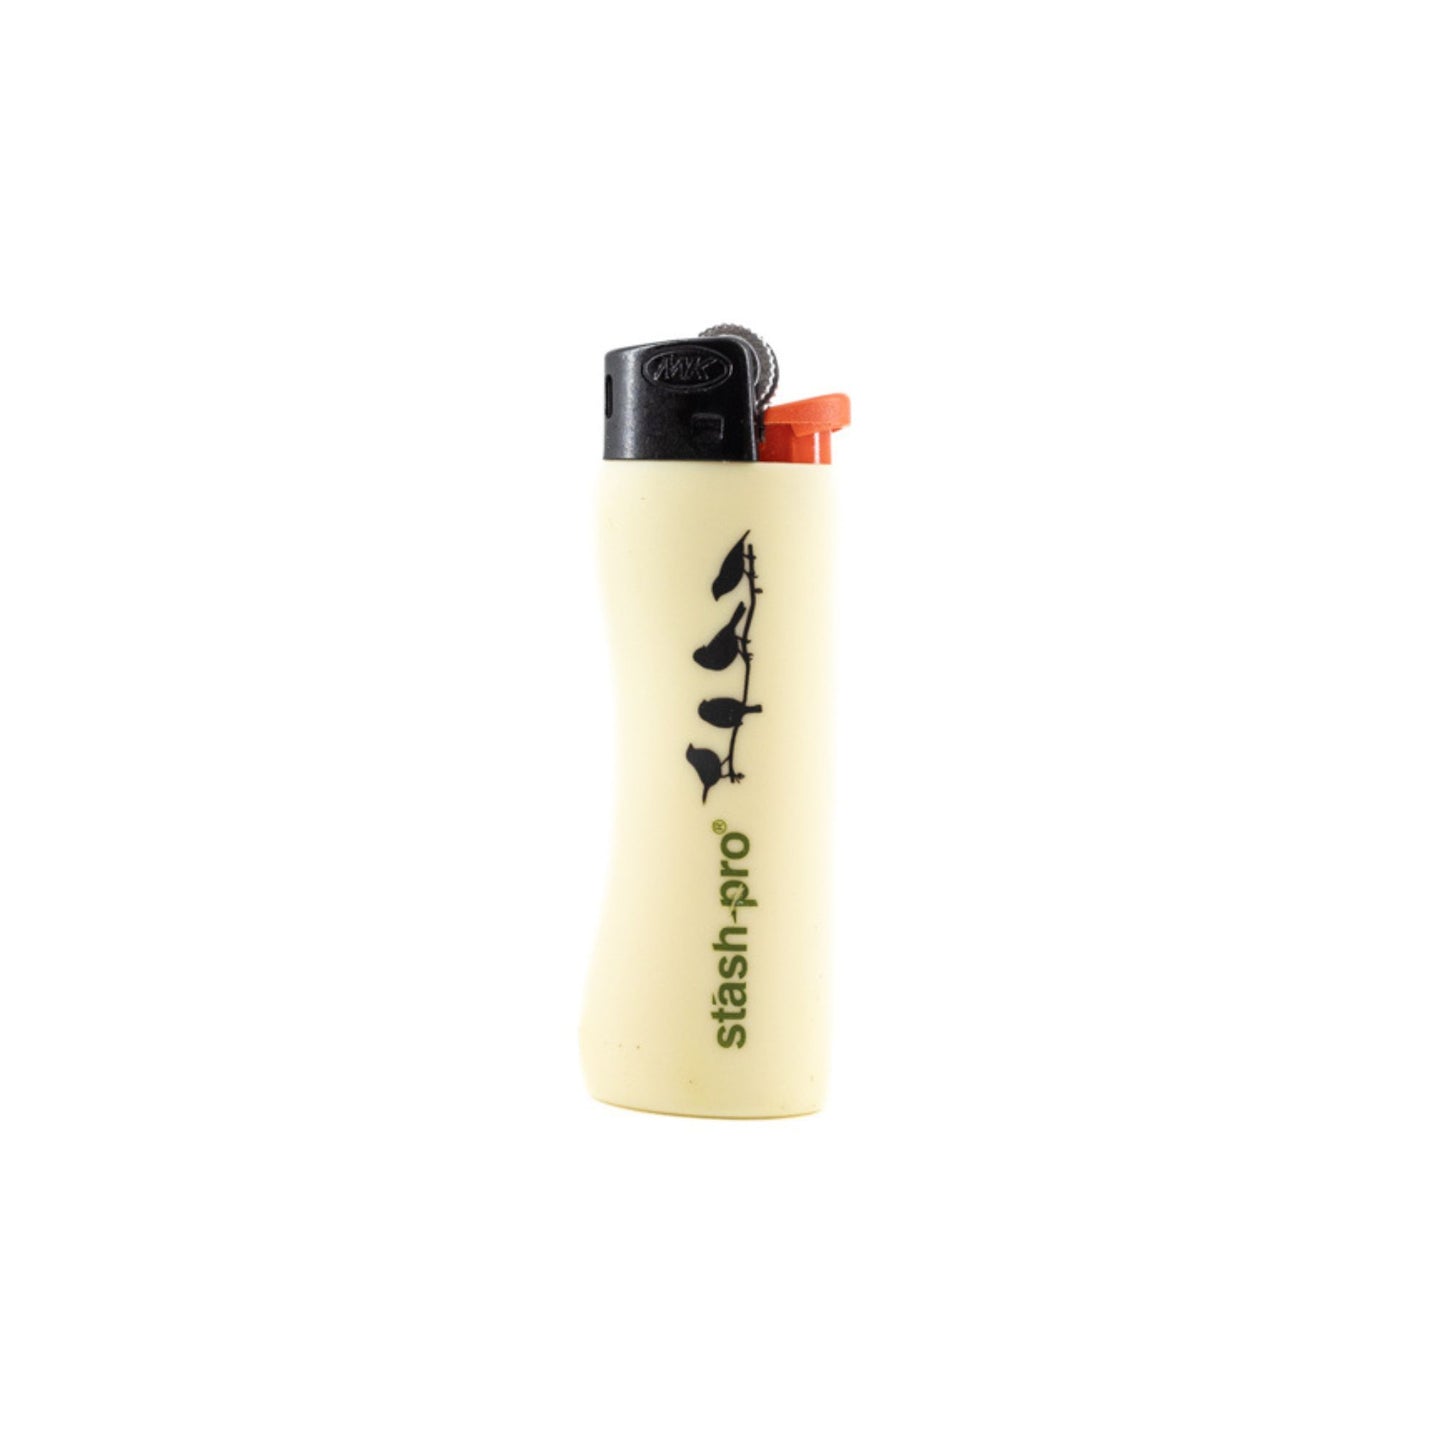 Stash-Pro Pocket Lighter Cream